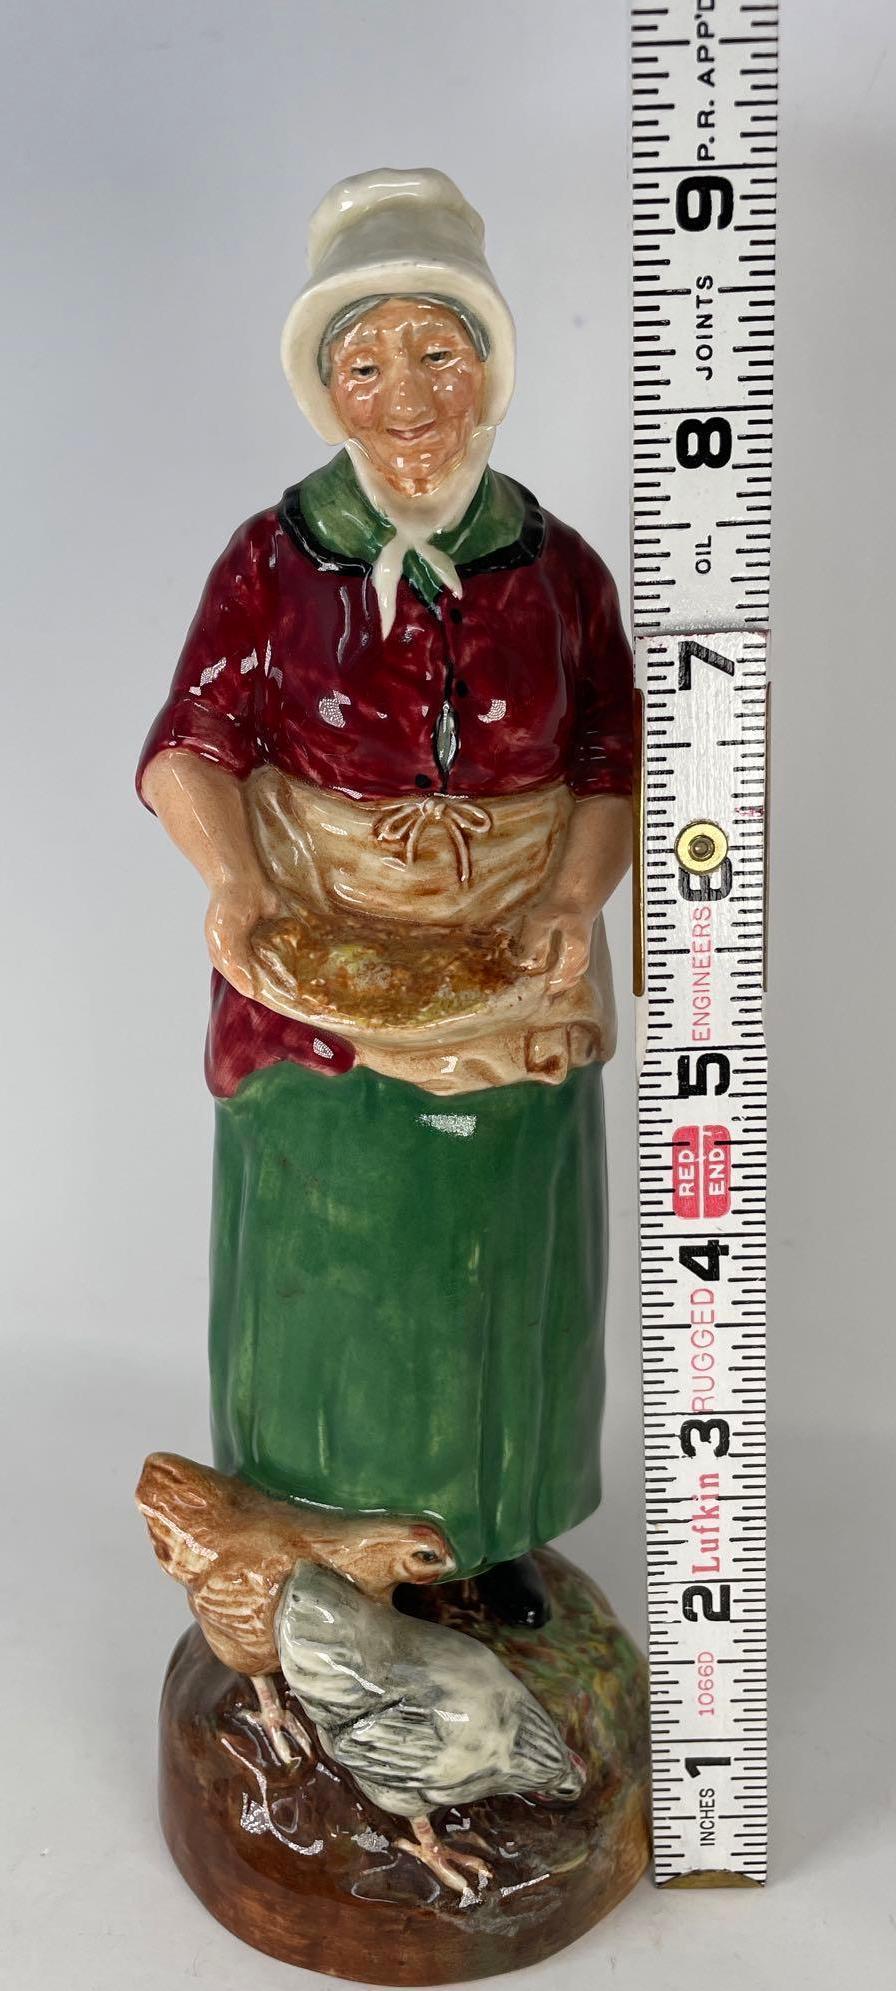 Royal Doulton Figure "The Farmer's Wife", HN 2069